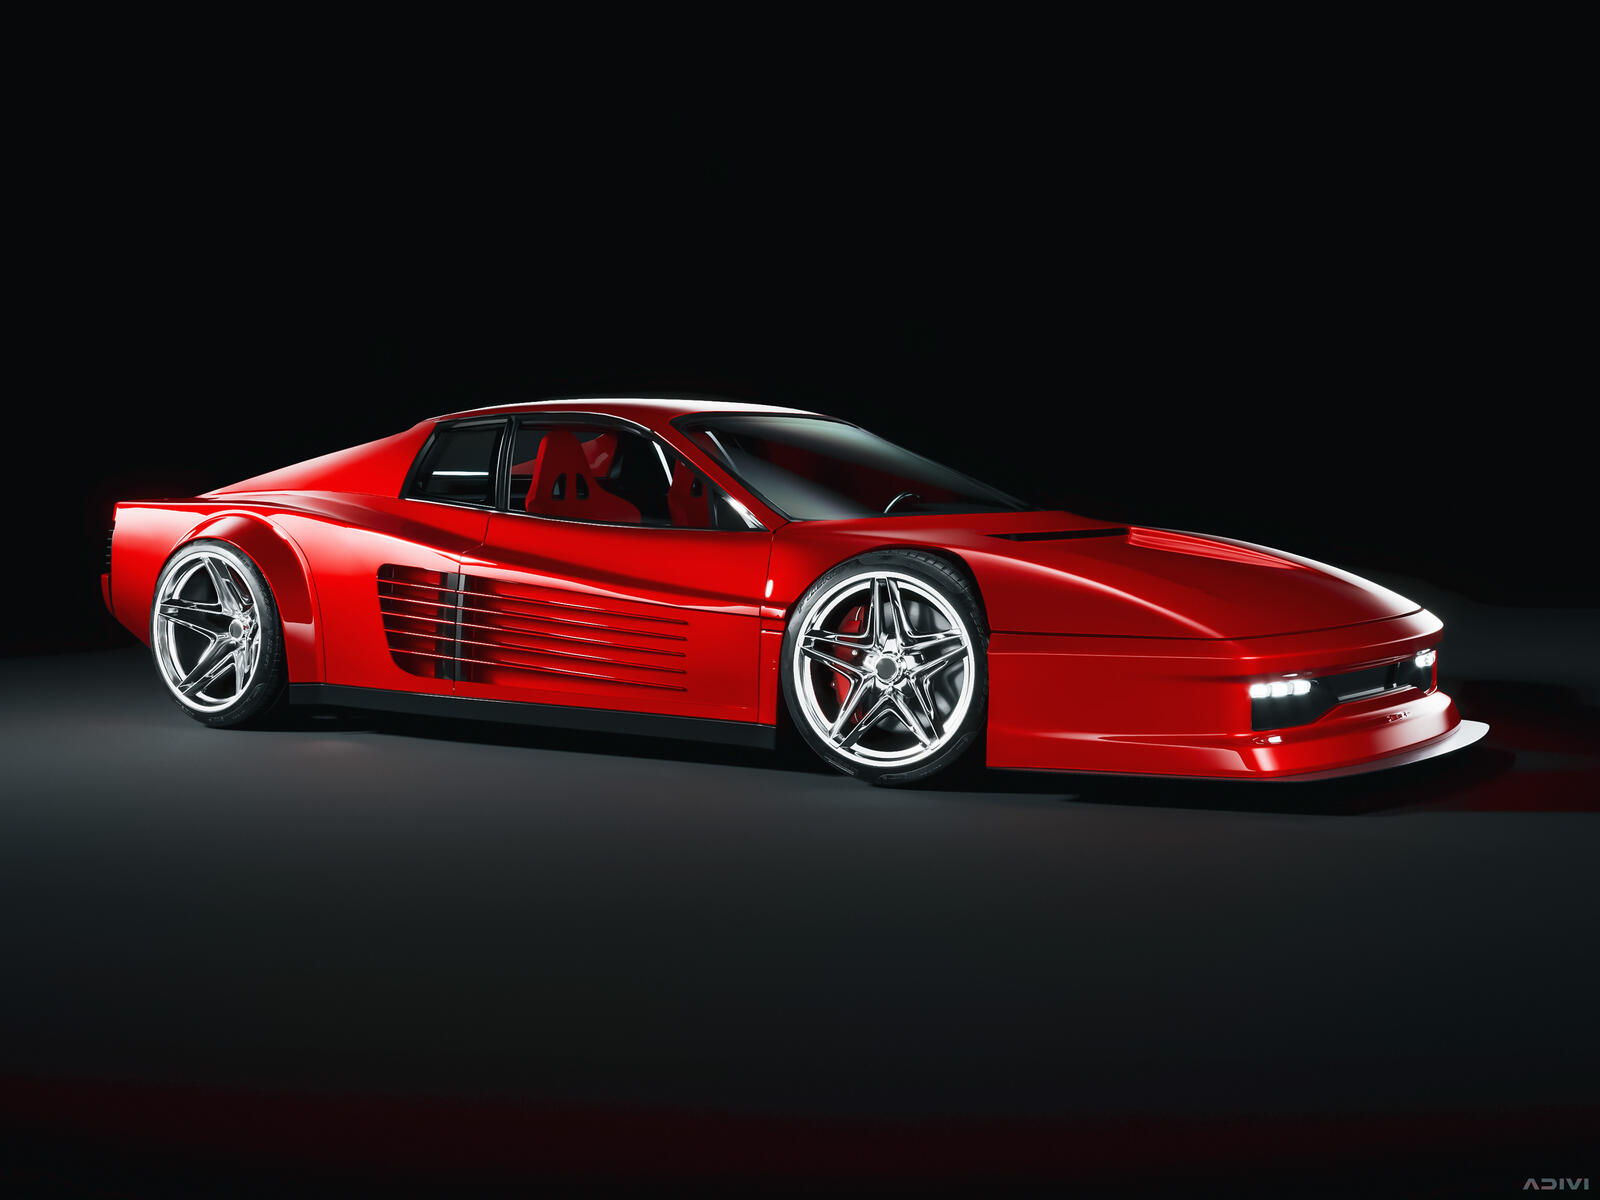 Free photo Ferrari testarossa red on black background